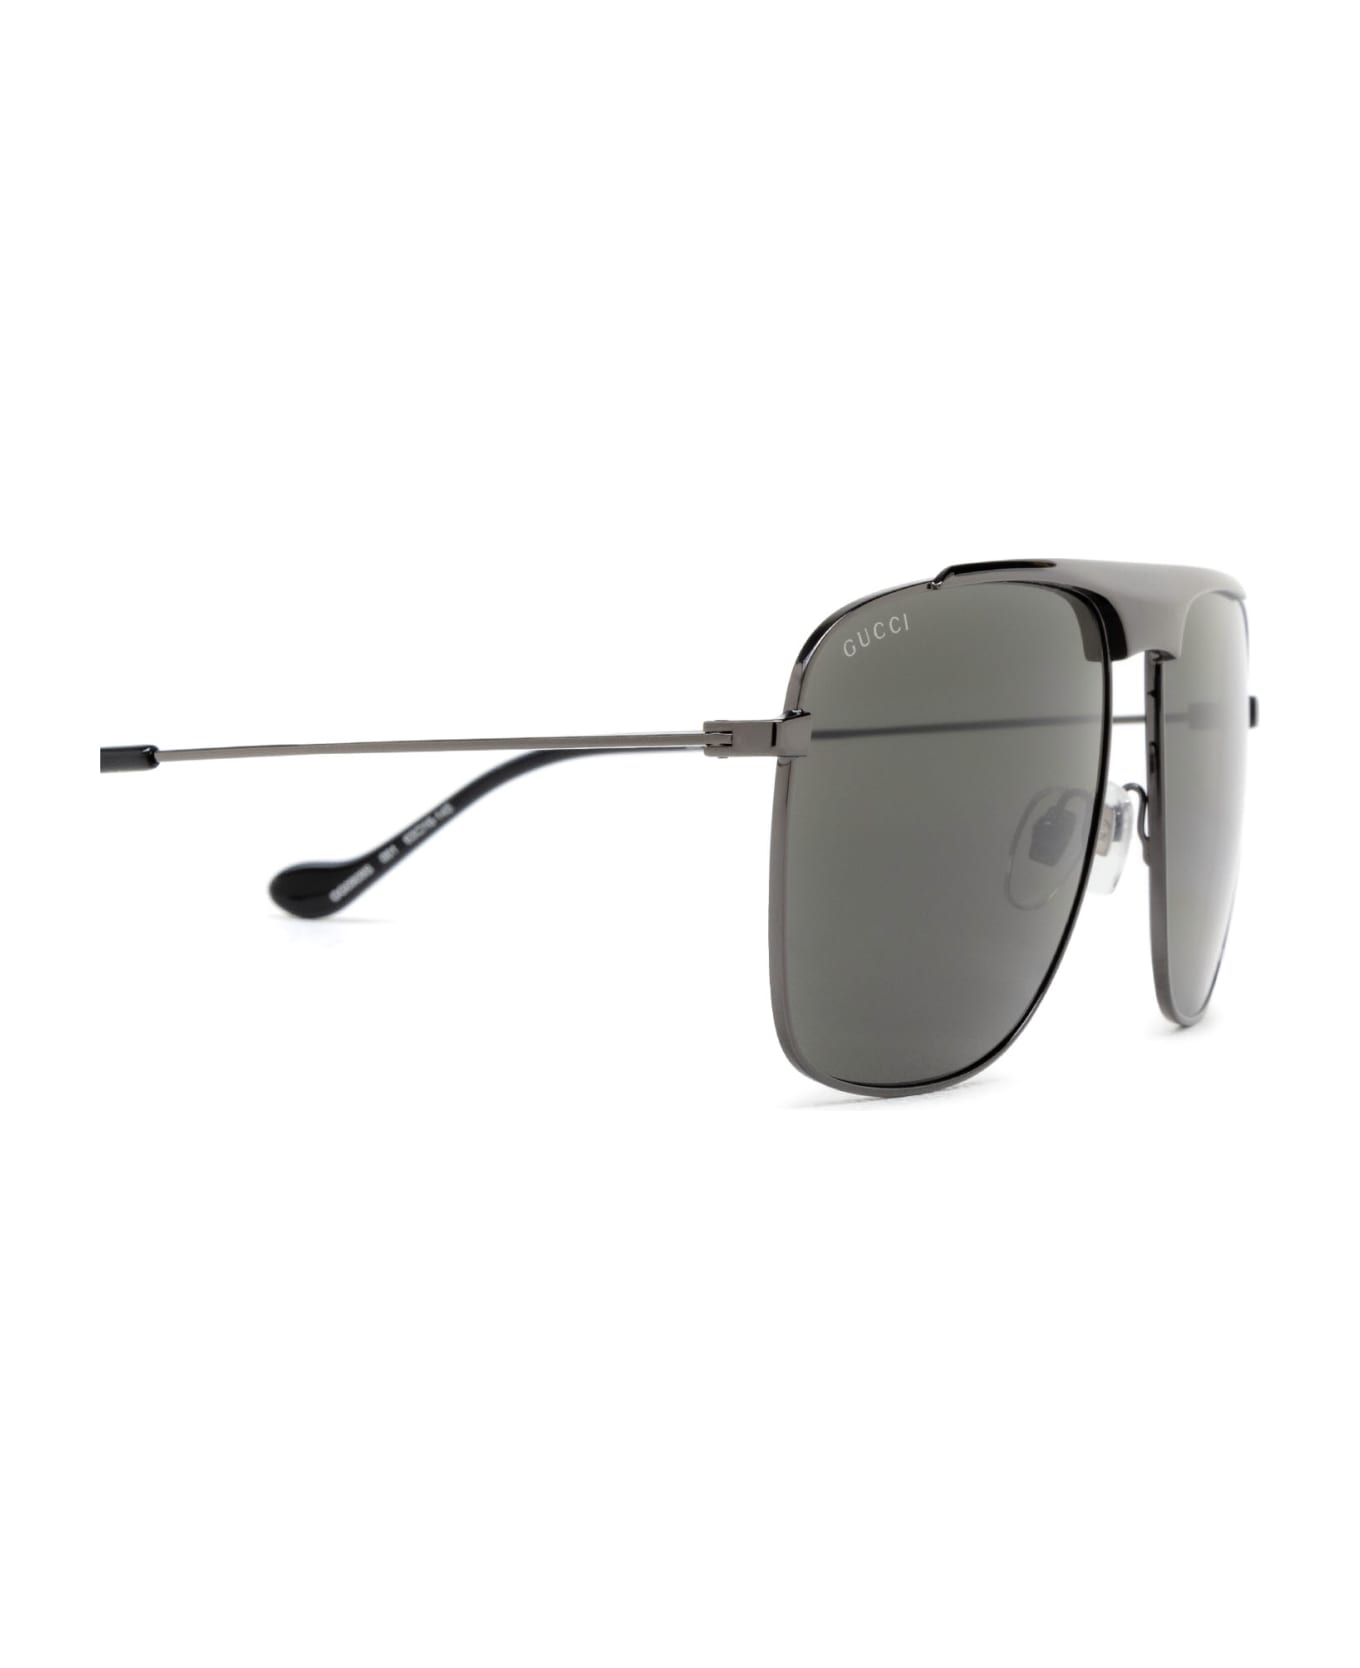 Gucci Eyewear Gg0909s Ruthenium Sunglasses - Ruthenium